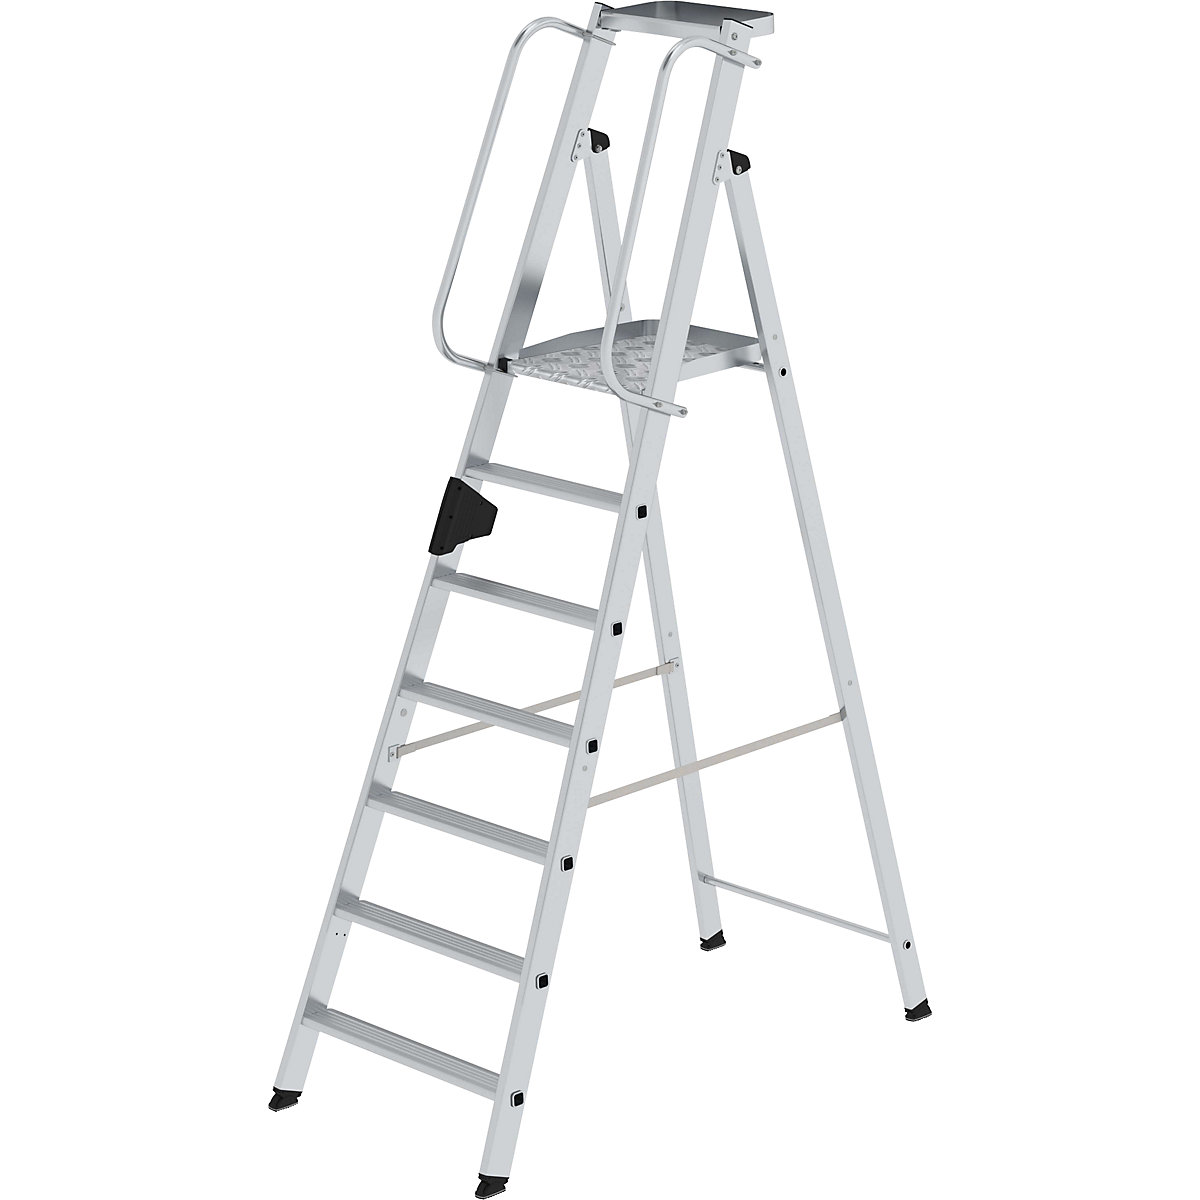 Aluminium step ladder with large platform – MUNK, hand rail on both sides, 7 steps inclusive platforms